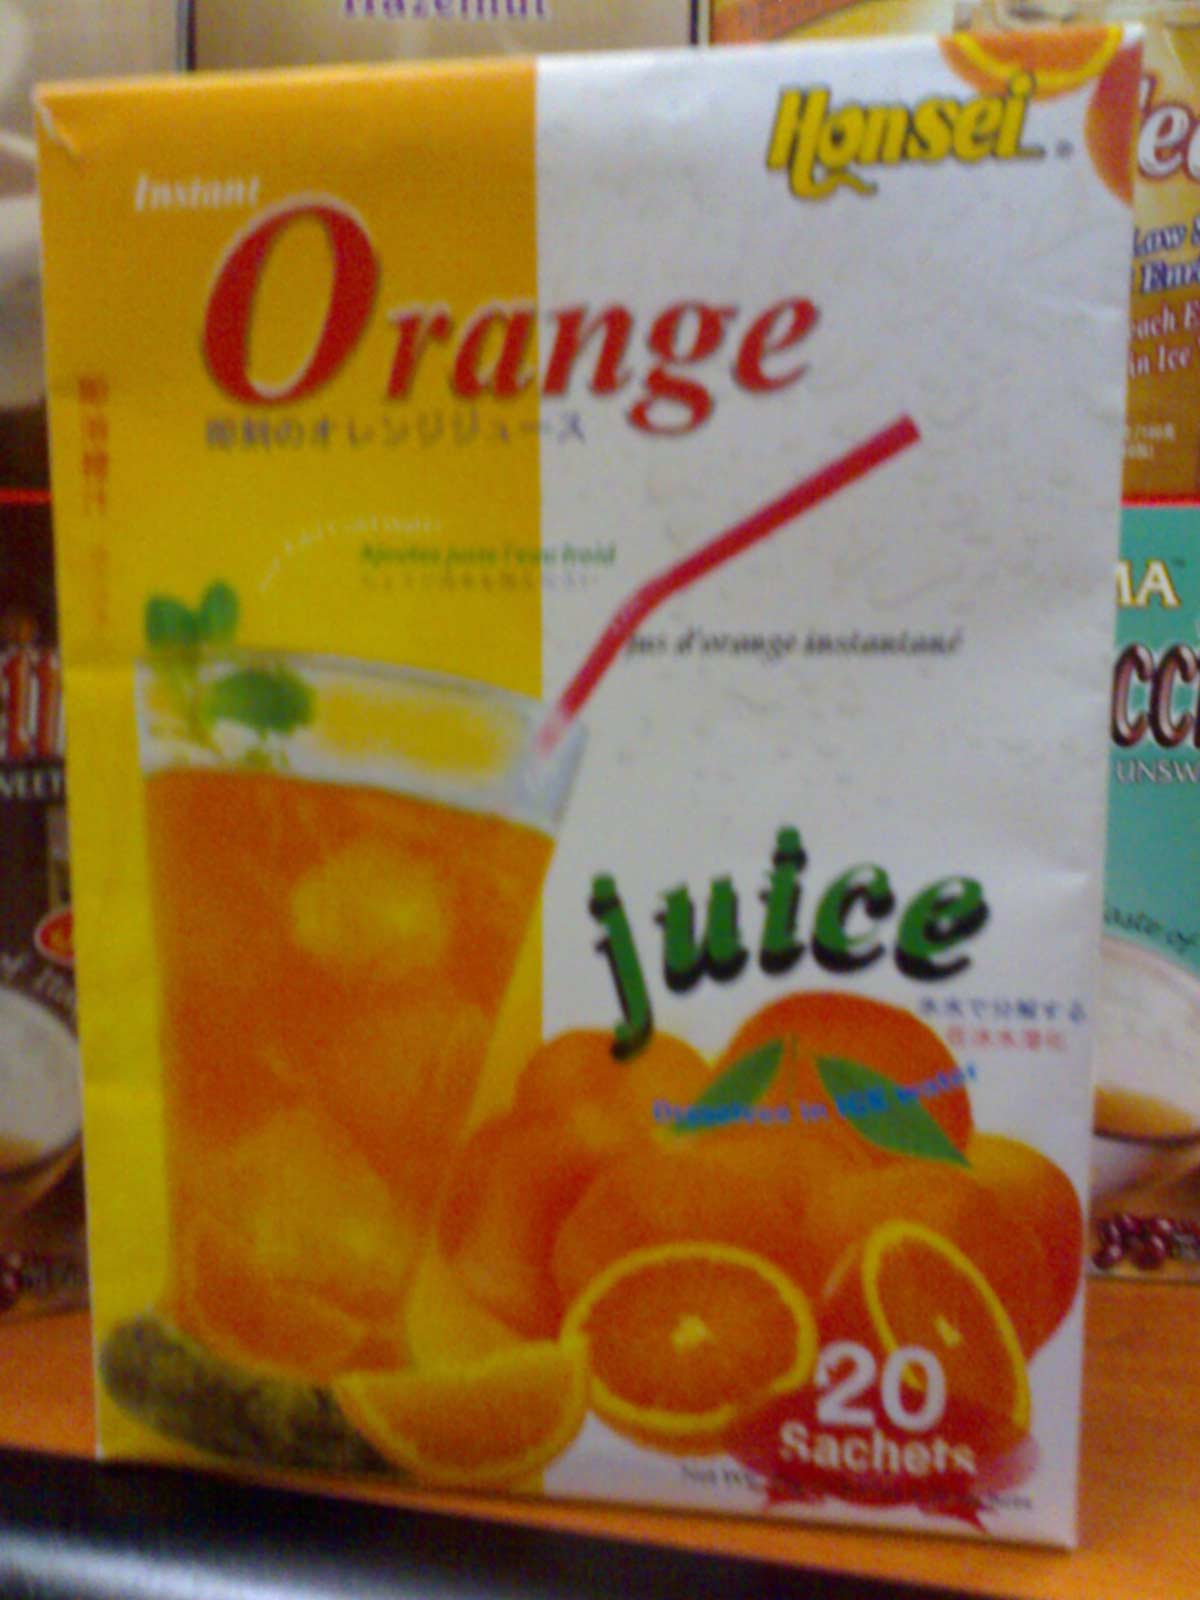  Honsei Orange & Mango Powder Drink ( Honsei Orange & Mango Powder Drink)